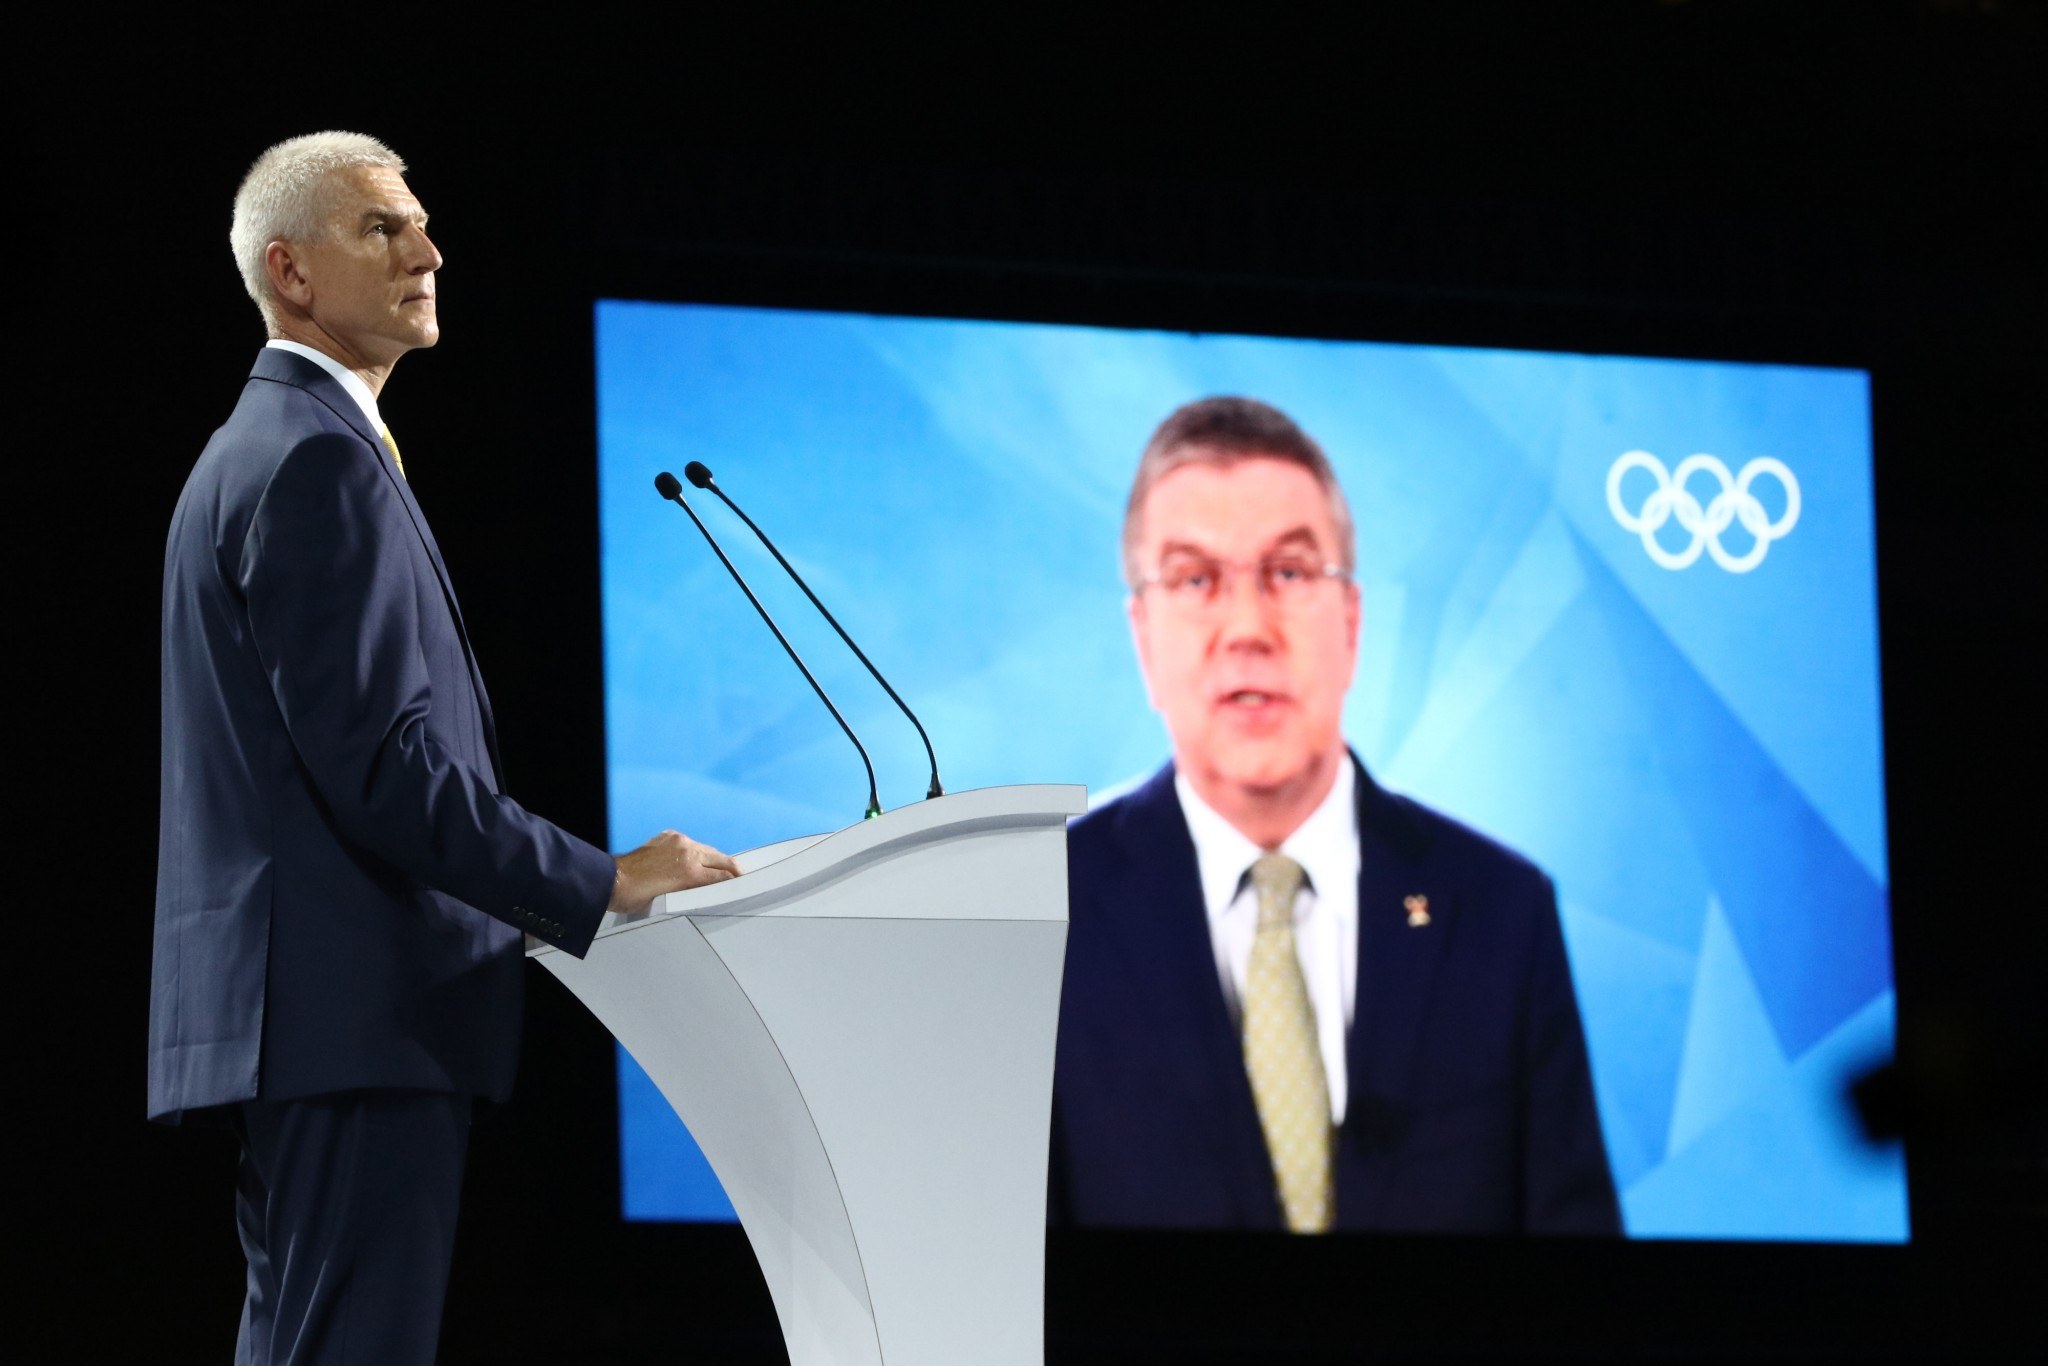 FISU President Oleg Matytsin, left, and IOC President Thomas Bach, right, both delivered speeches ©Taipei 2017